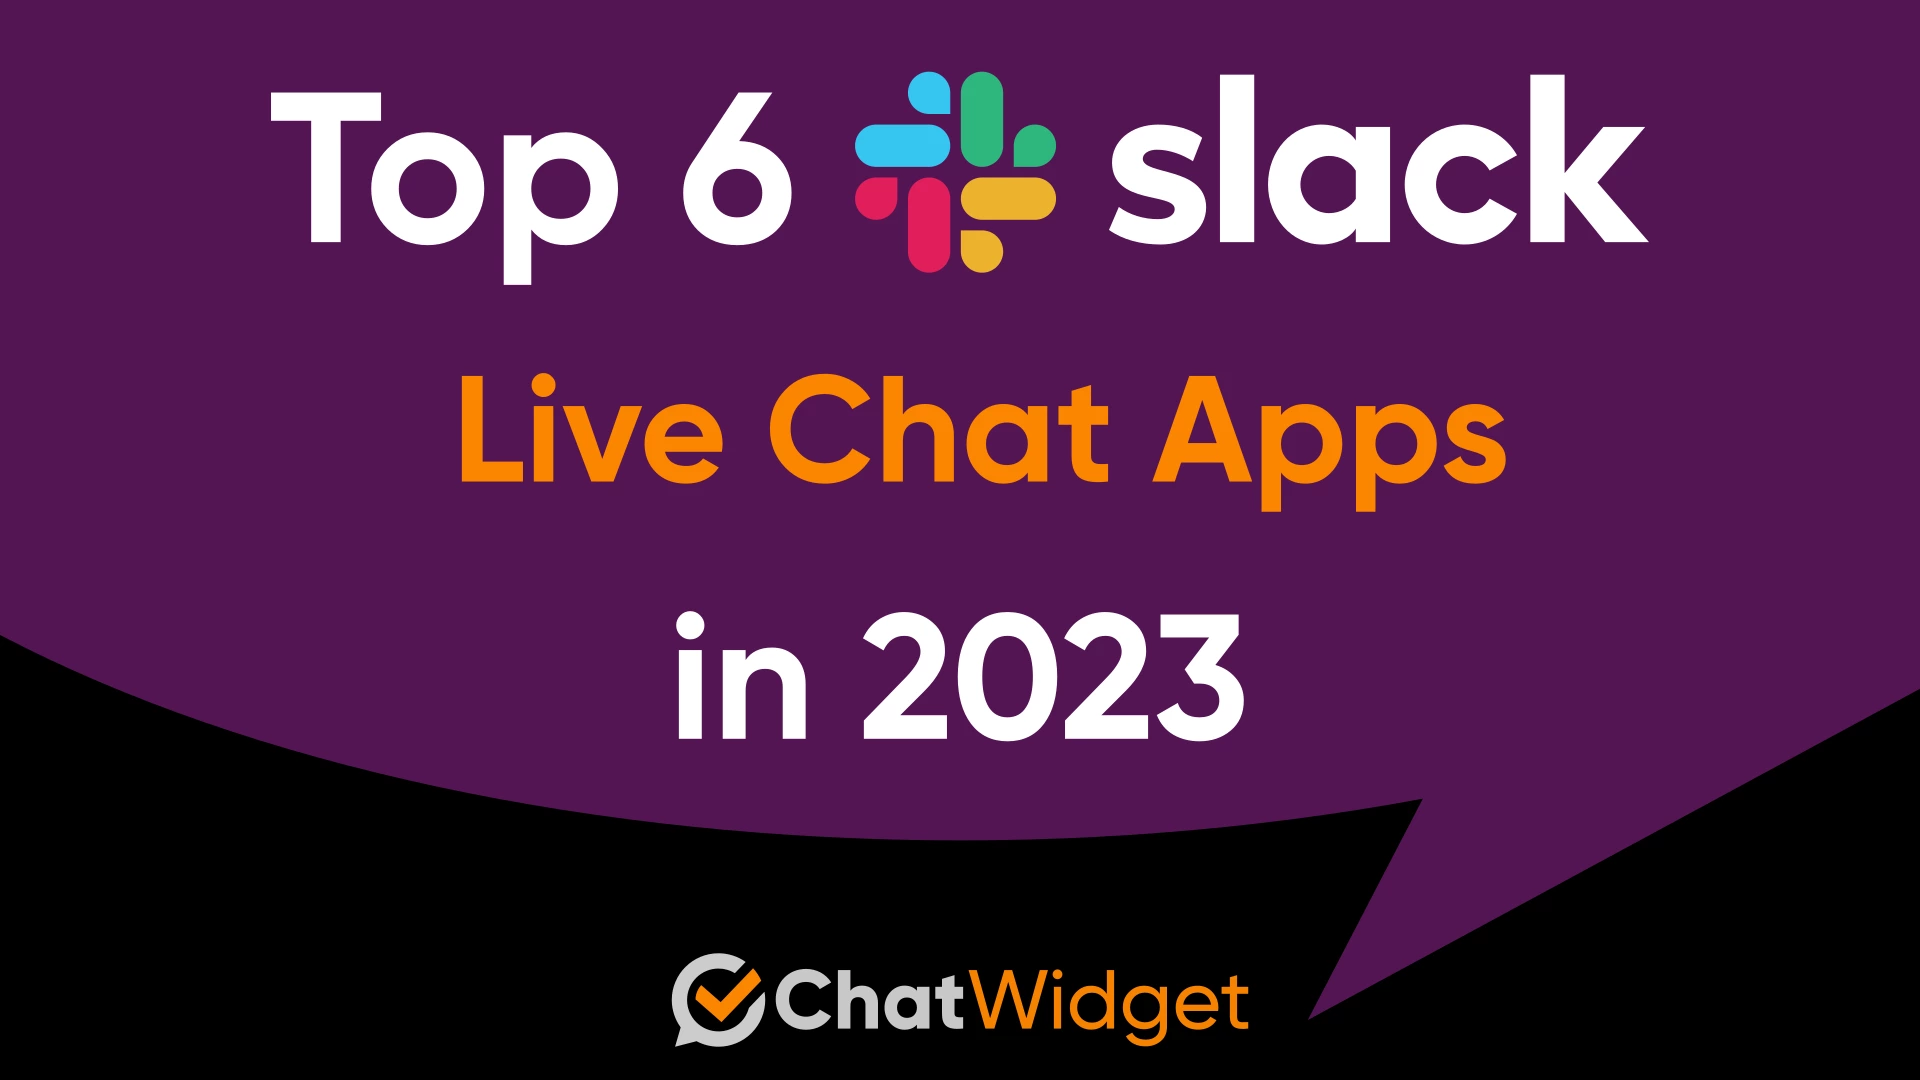 Top 6 Slack Apps for Live Chat in 2023